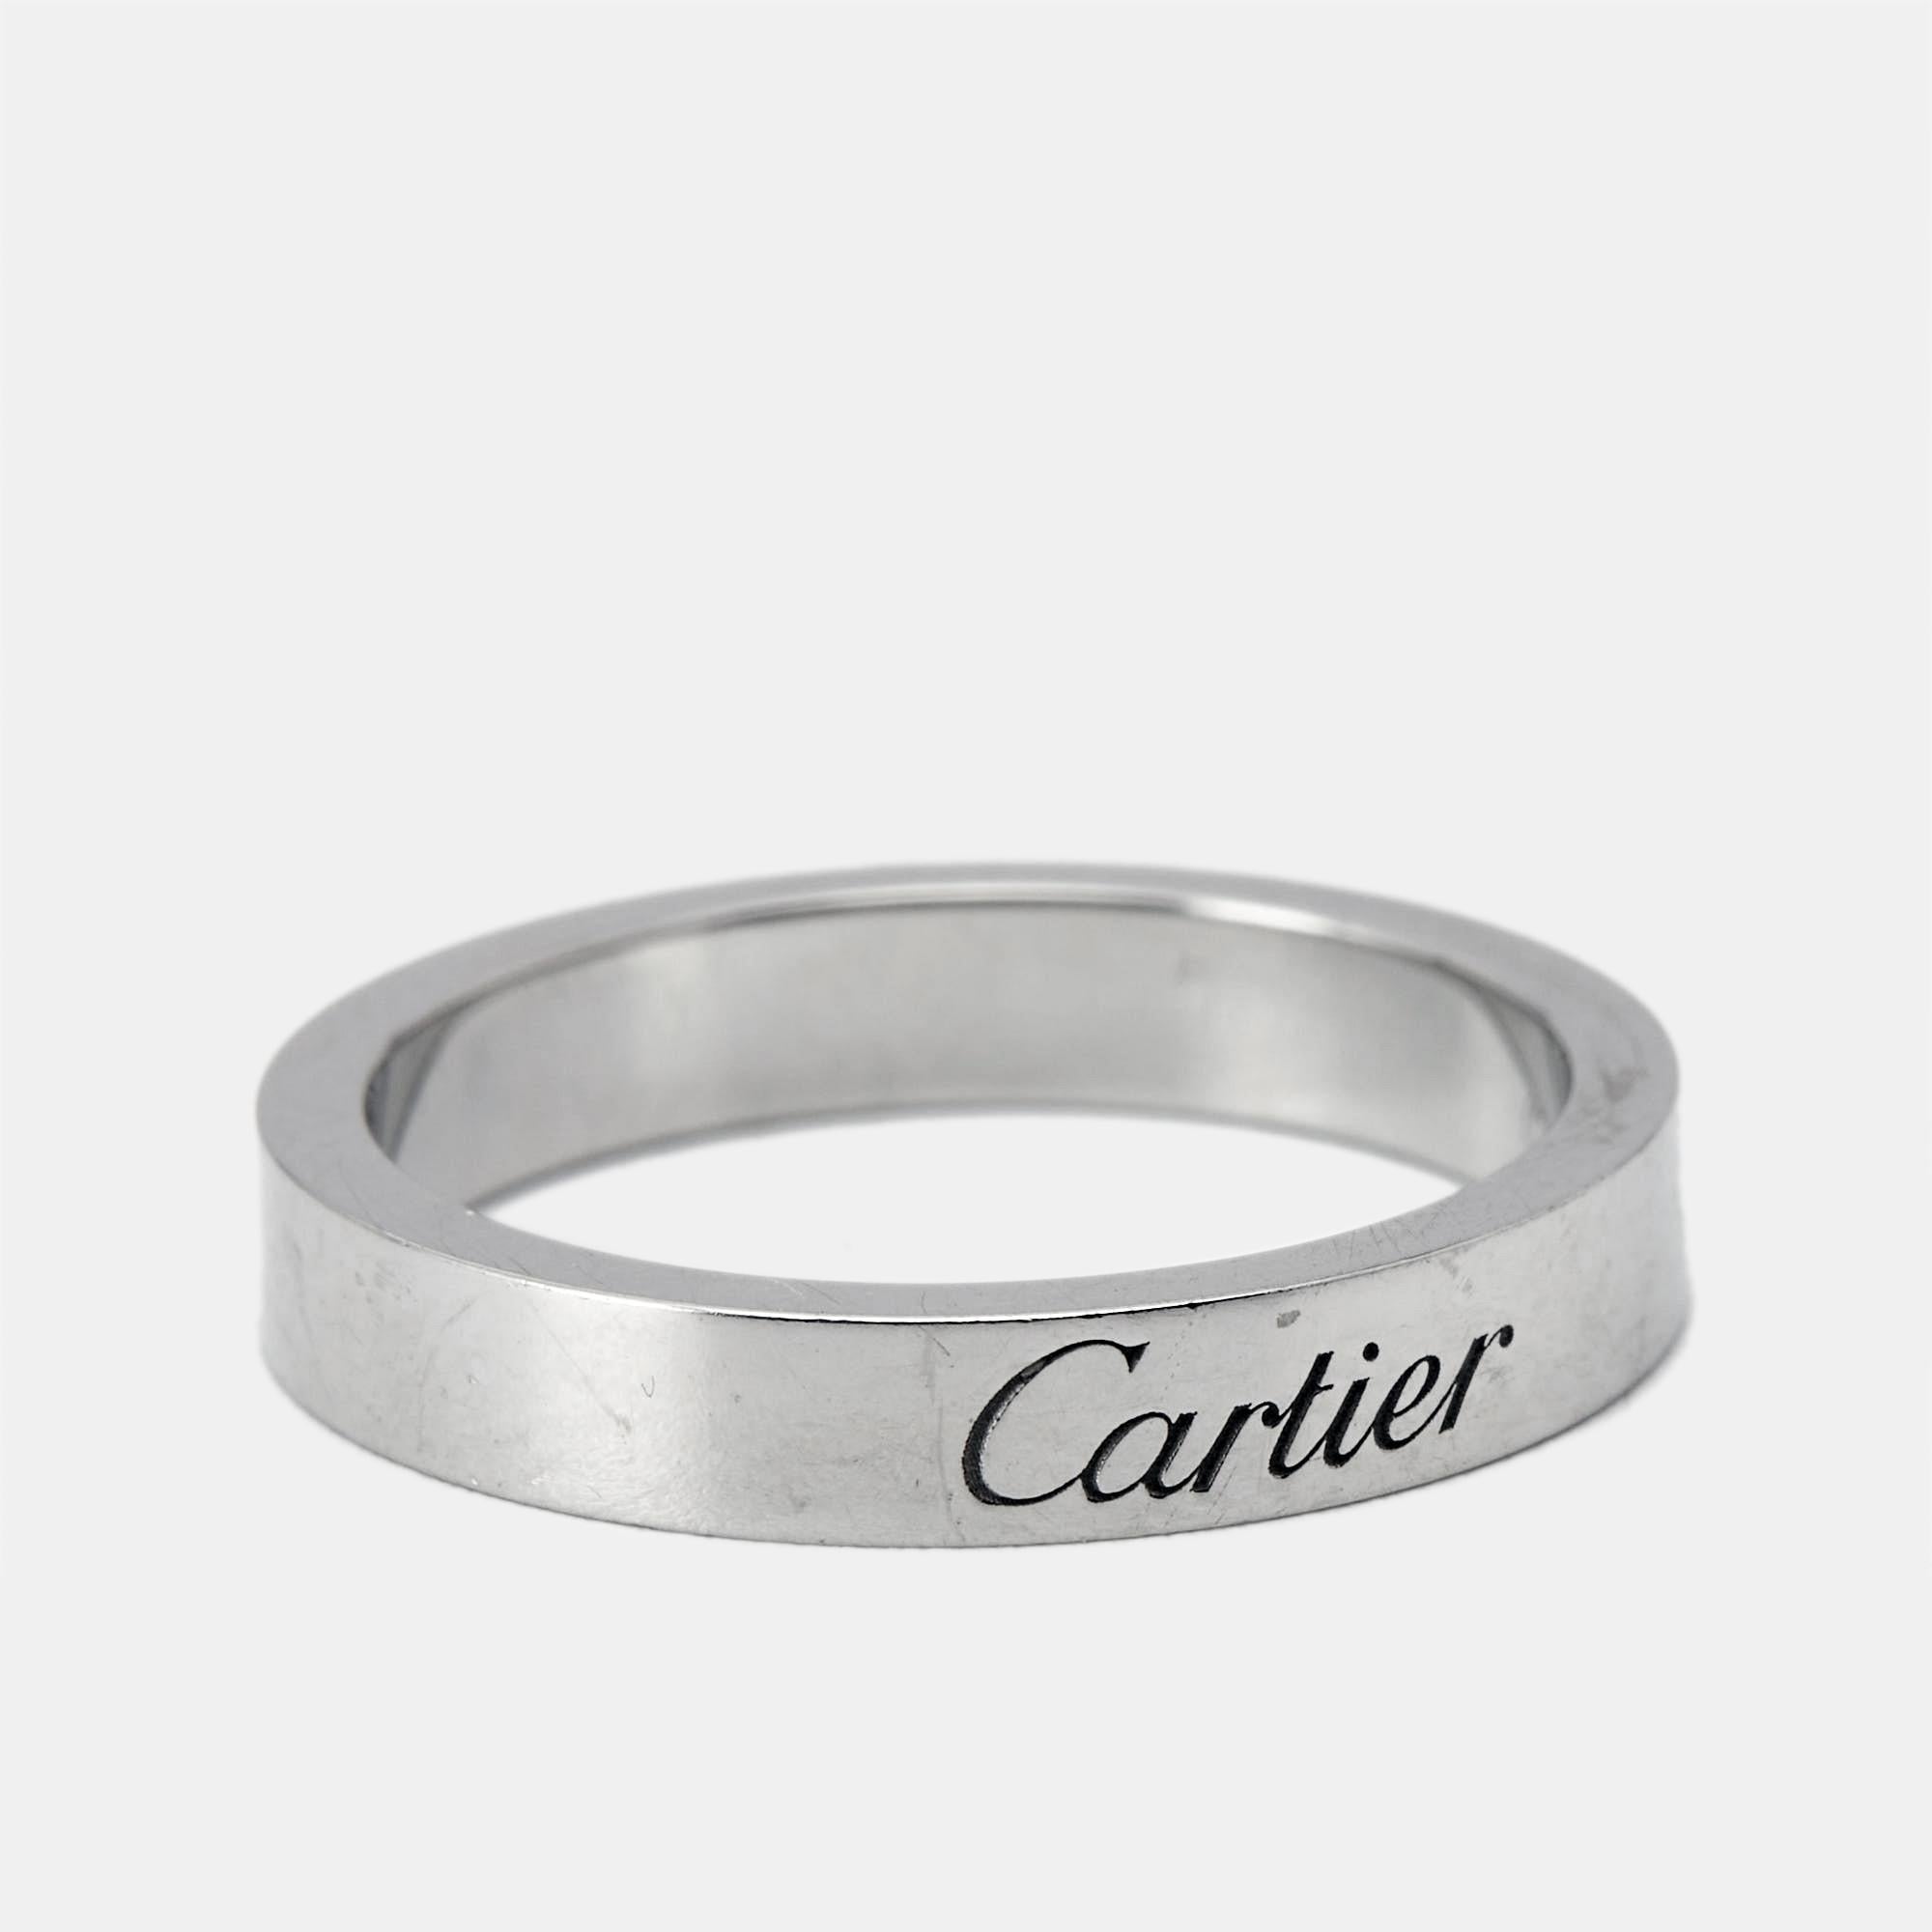 Cartier C De Cartier Platinum Wedding Band Ring Size 48 In Good Condition For Sale In Dubai, Al Qouz 2